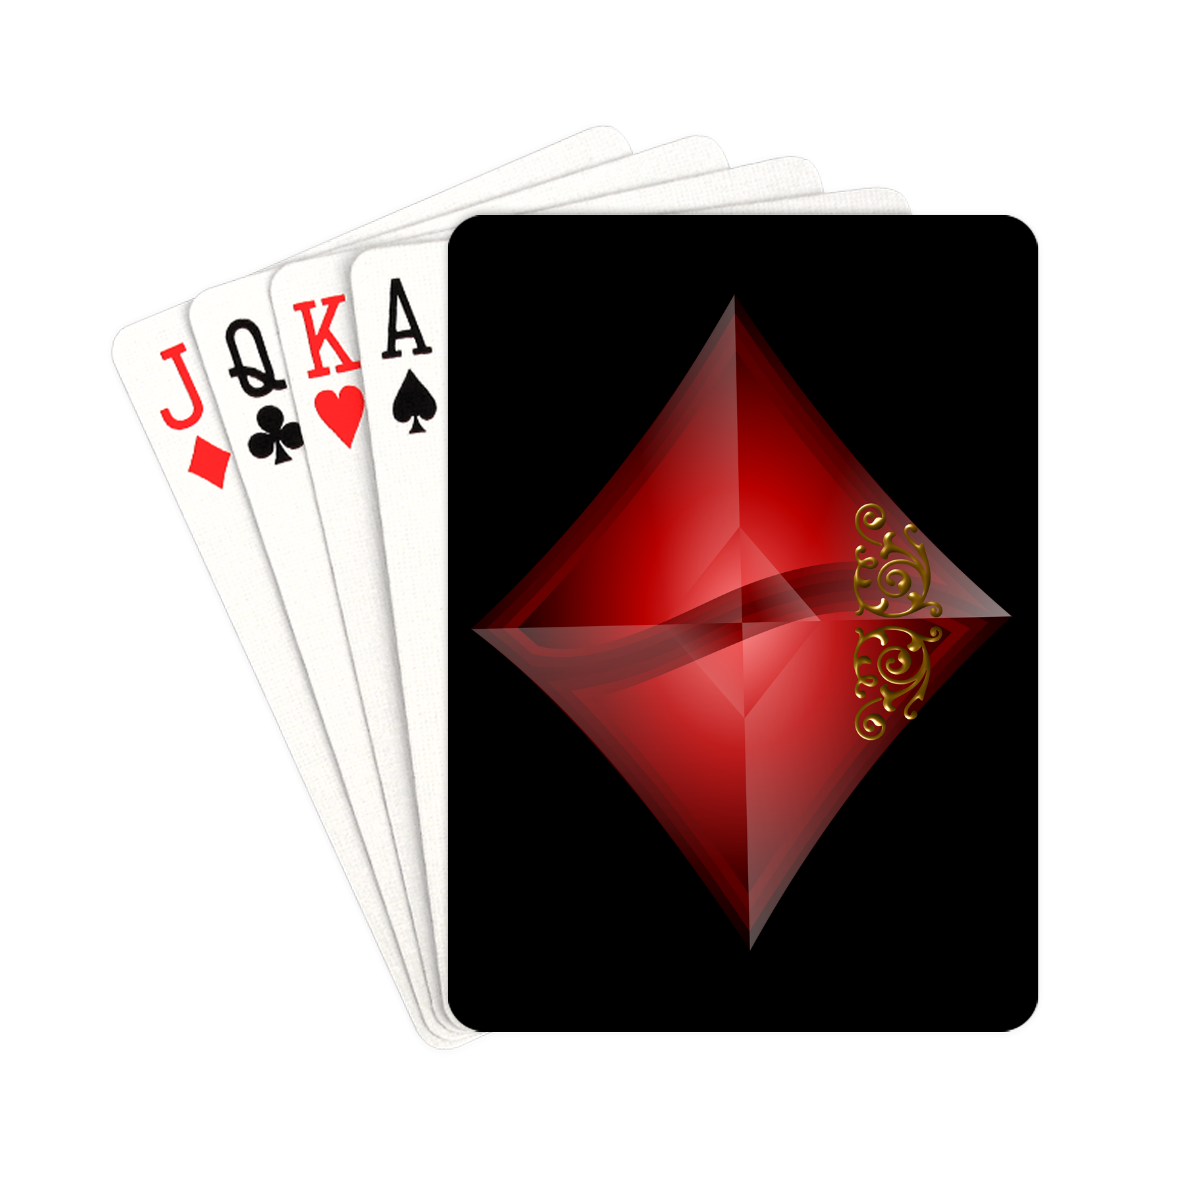 Diamond Las Vegas Playing Card Shape on Black Playing Cards 2.5"x3.5"